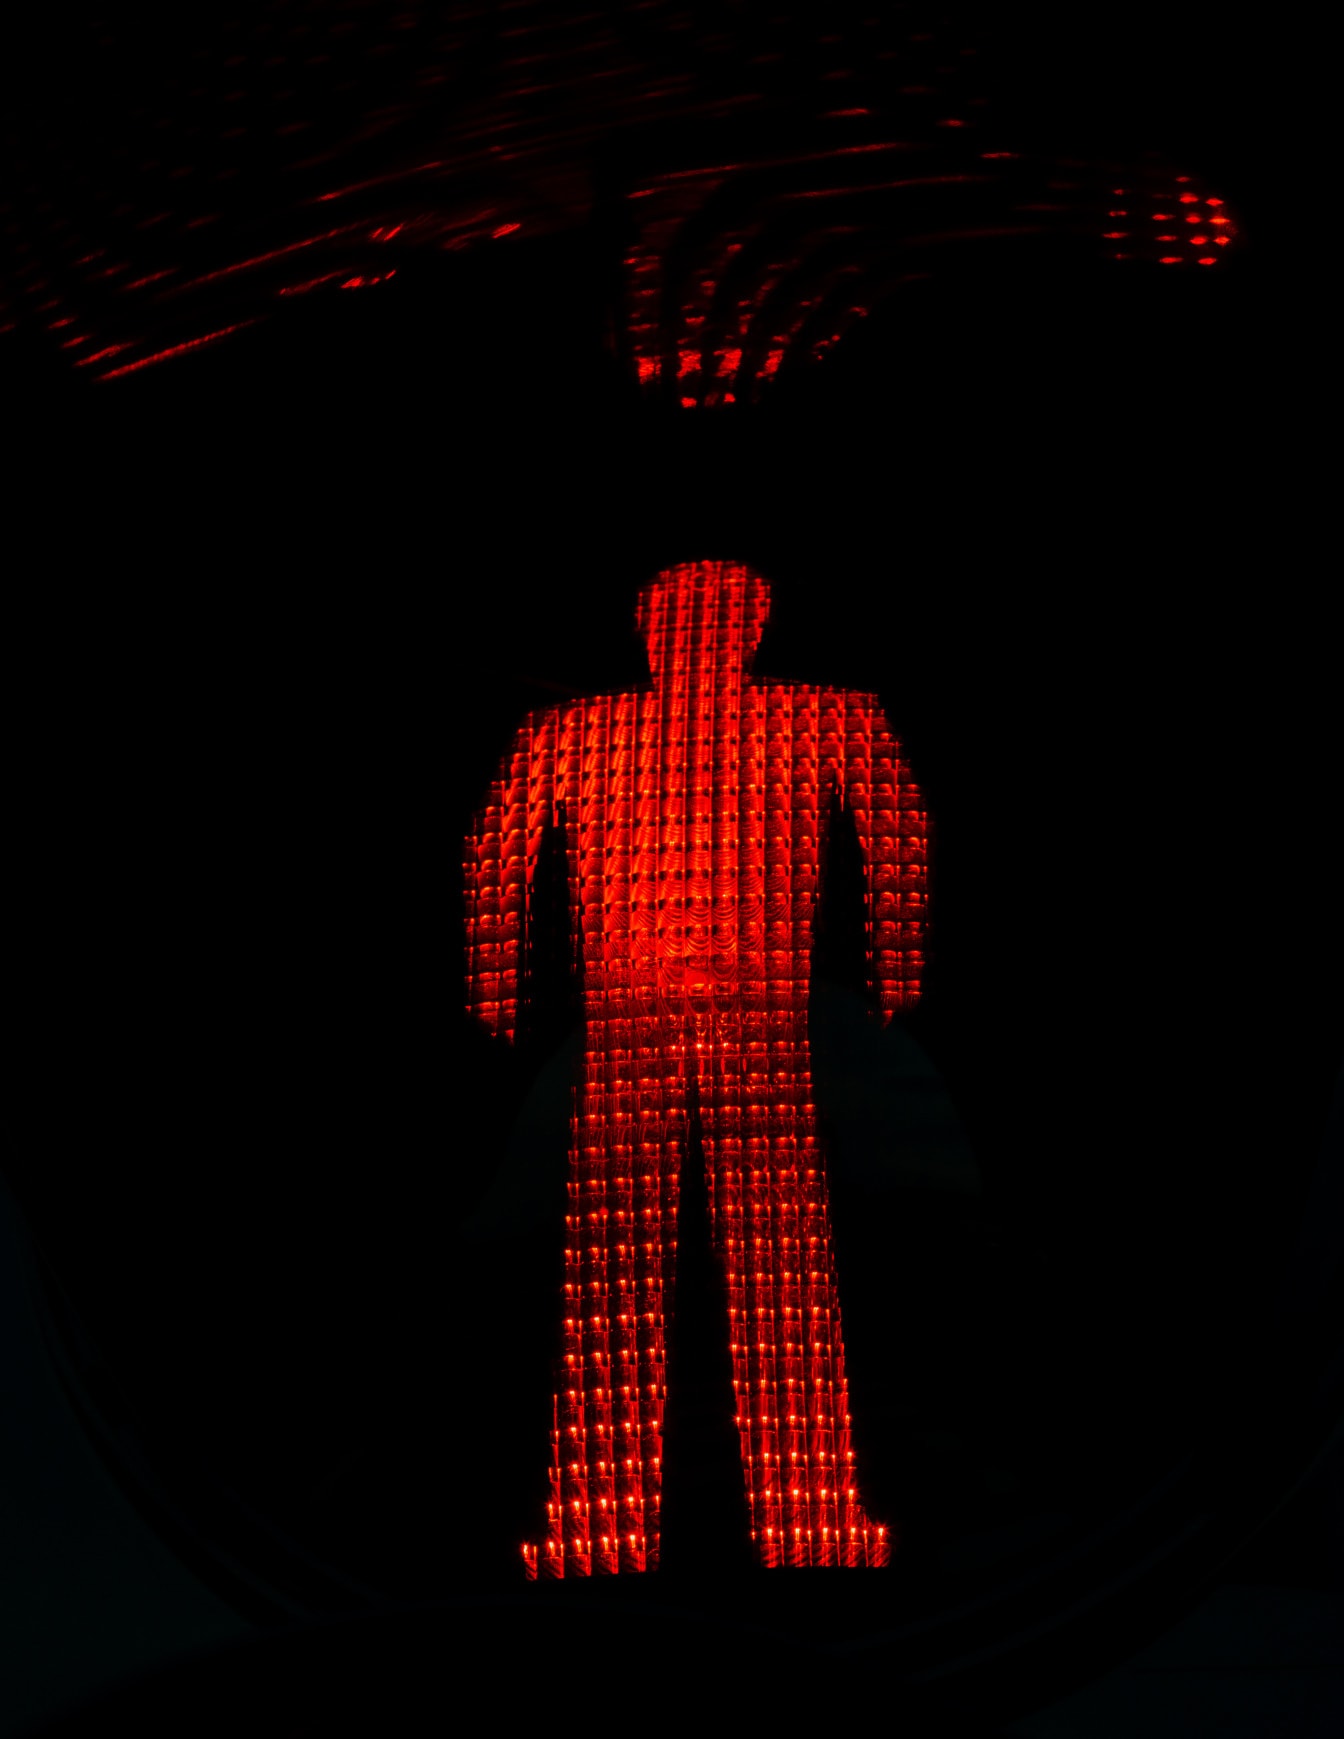 Lampu semaphore merah dengan simbol seseorang berdiri